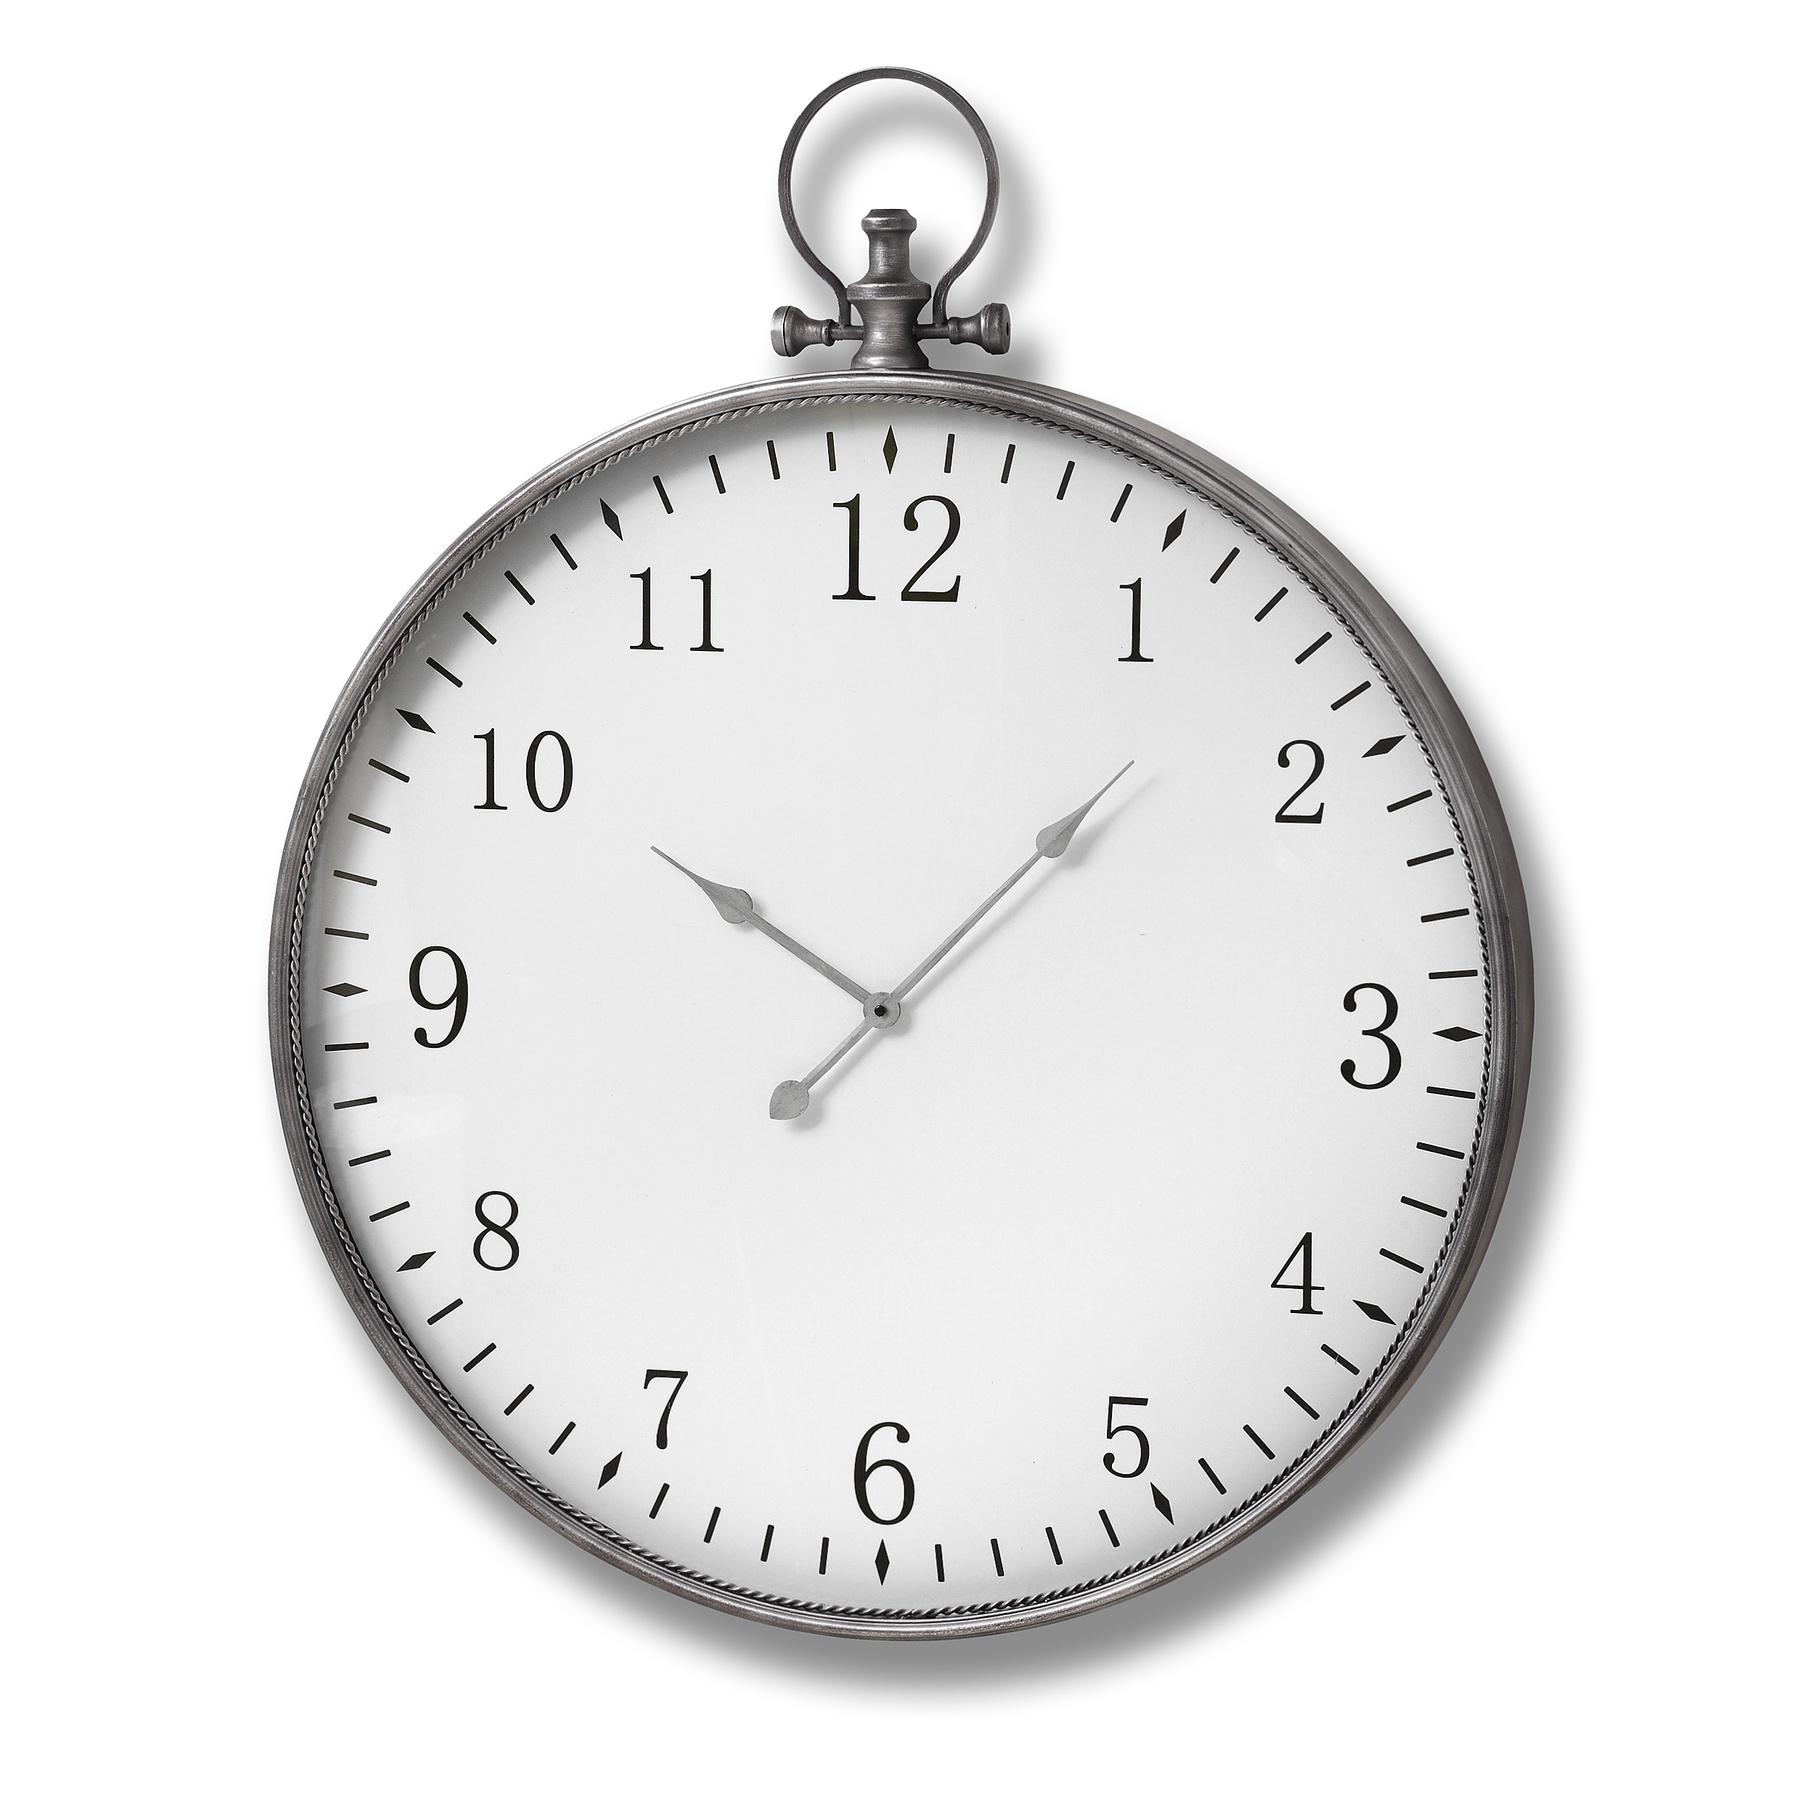 Silver Pocket Watch Wall Clock - Image 1